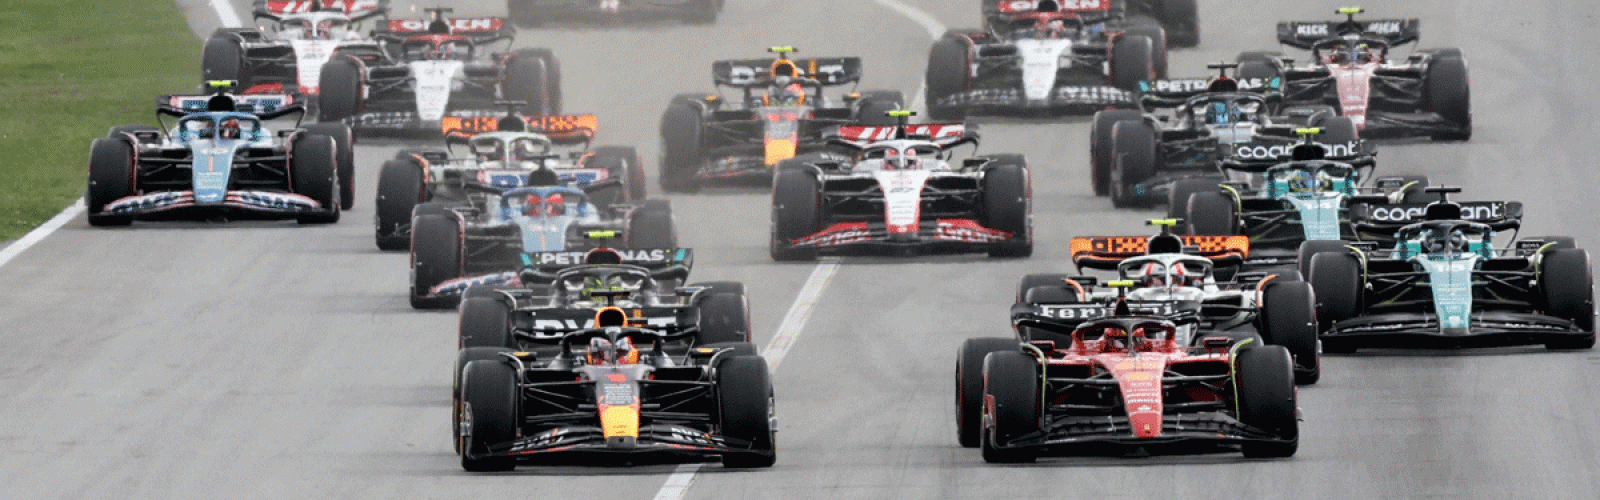 Spanish Formula 1 Grand Prix travel & ticket packages image